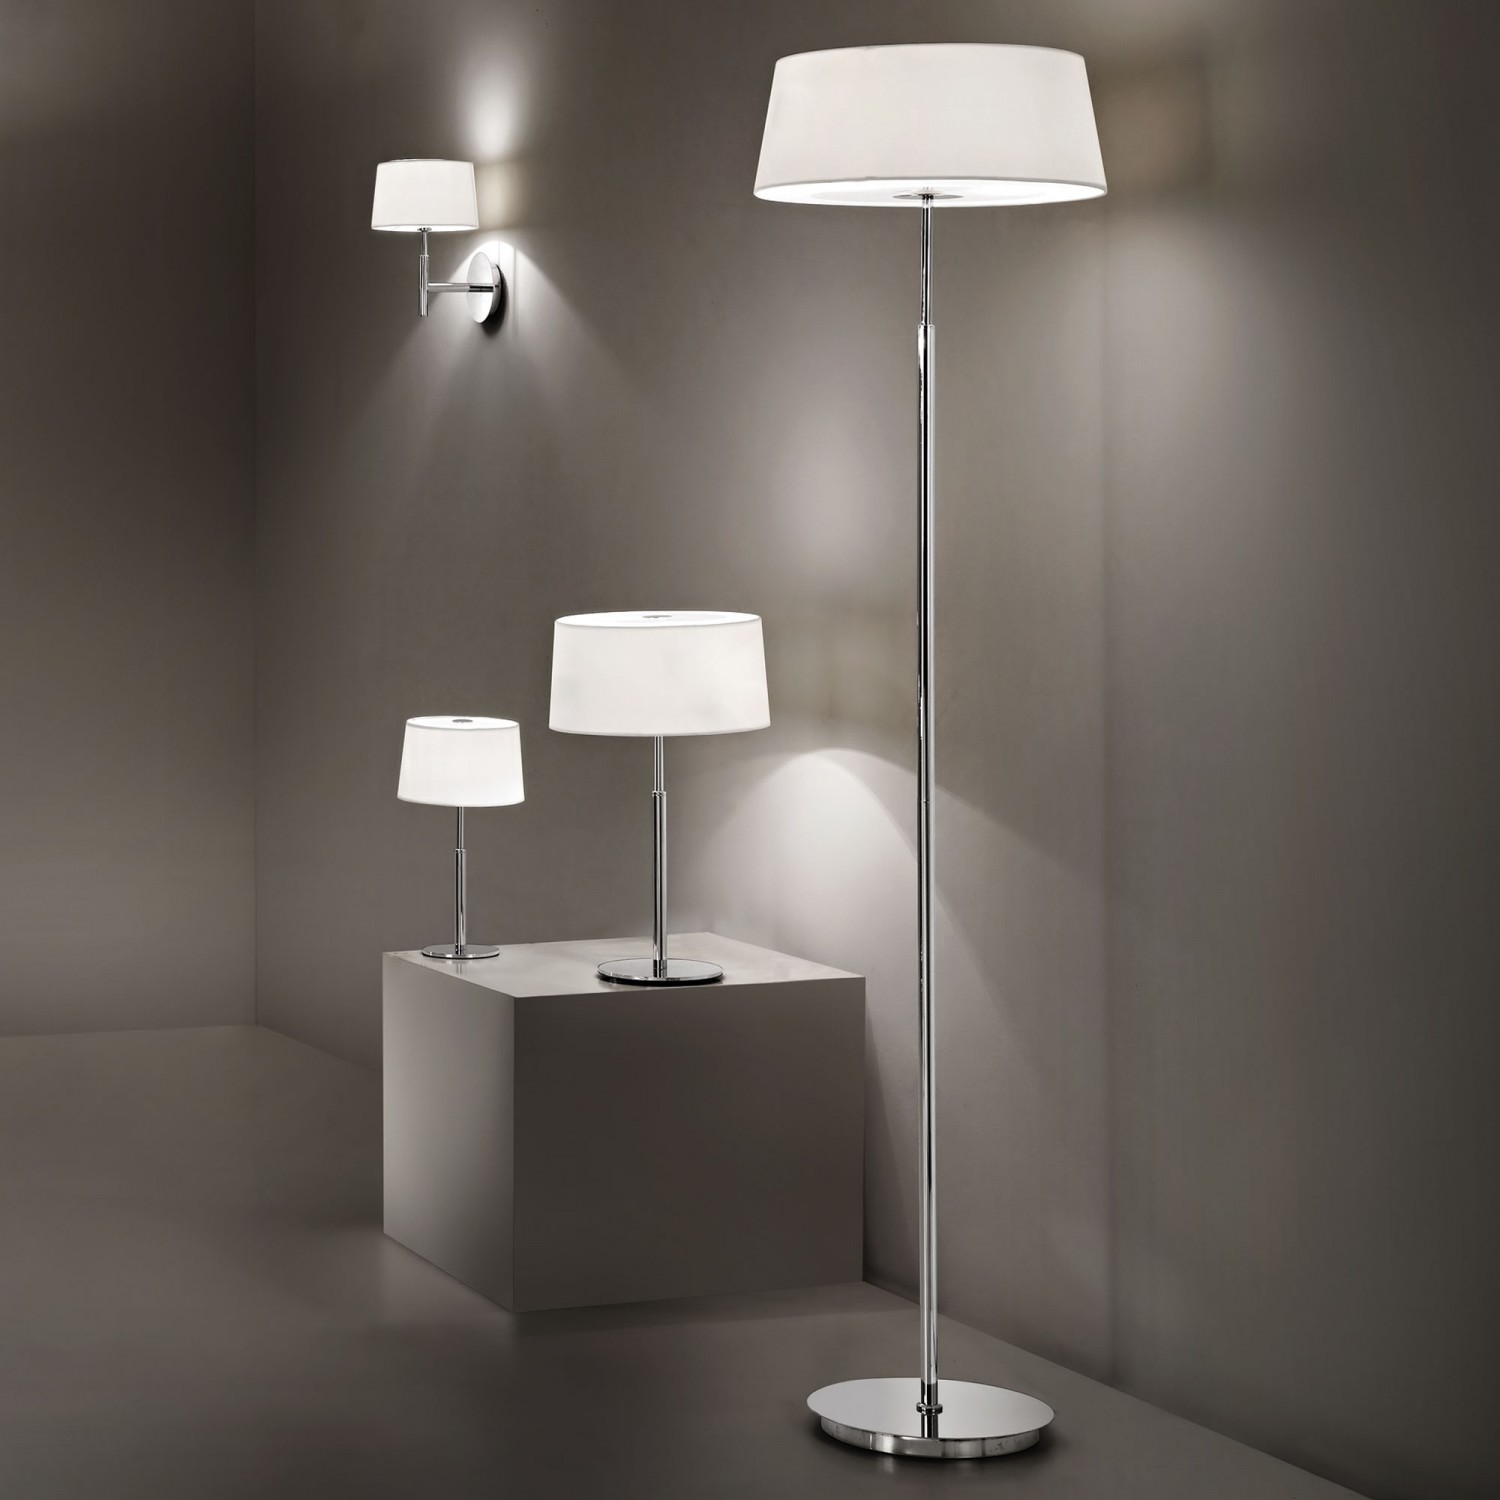 Настільна лампа Ideal Lux HILTON TL2 BIANCO 075532